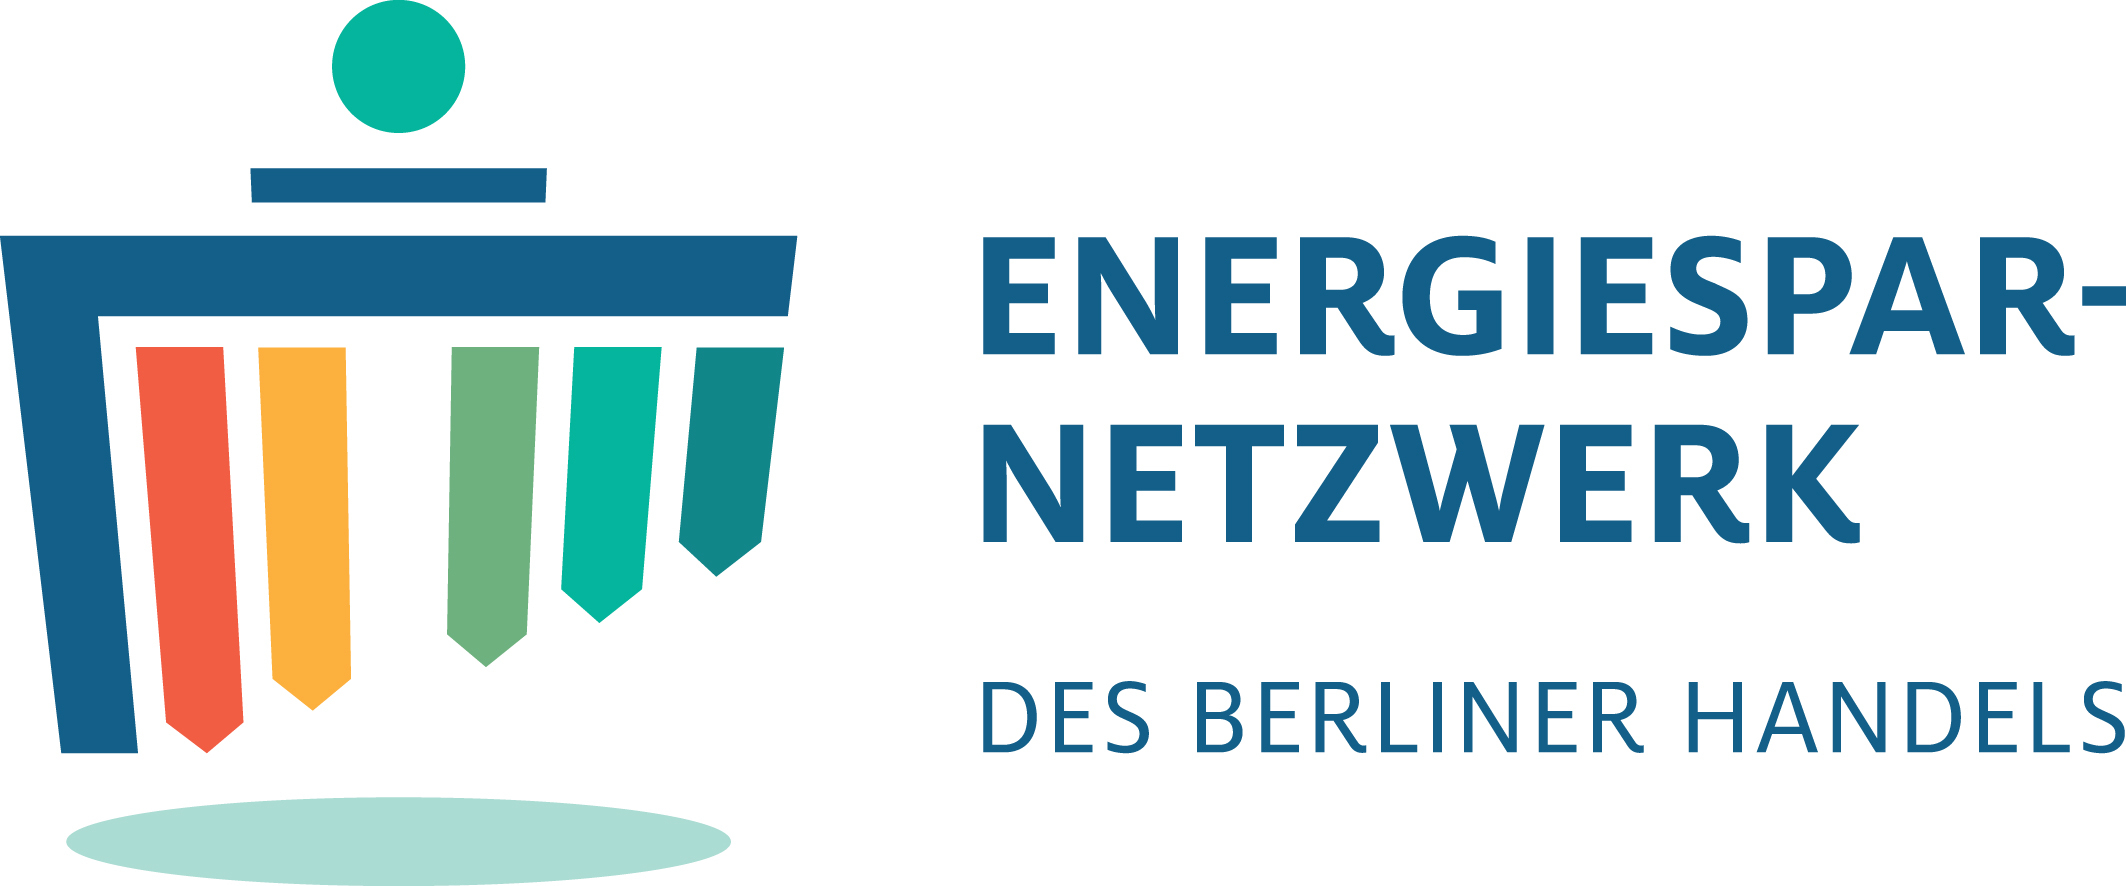 Energiesparnetzwek des Berliner Handels